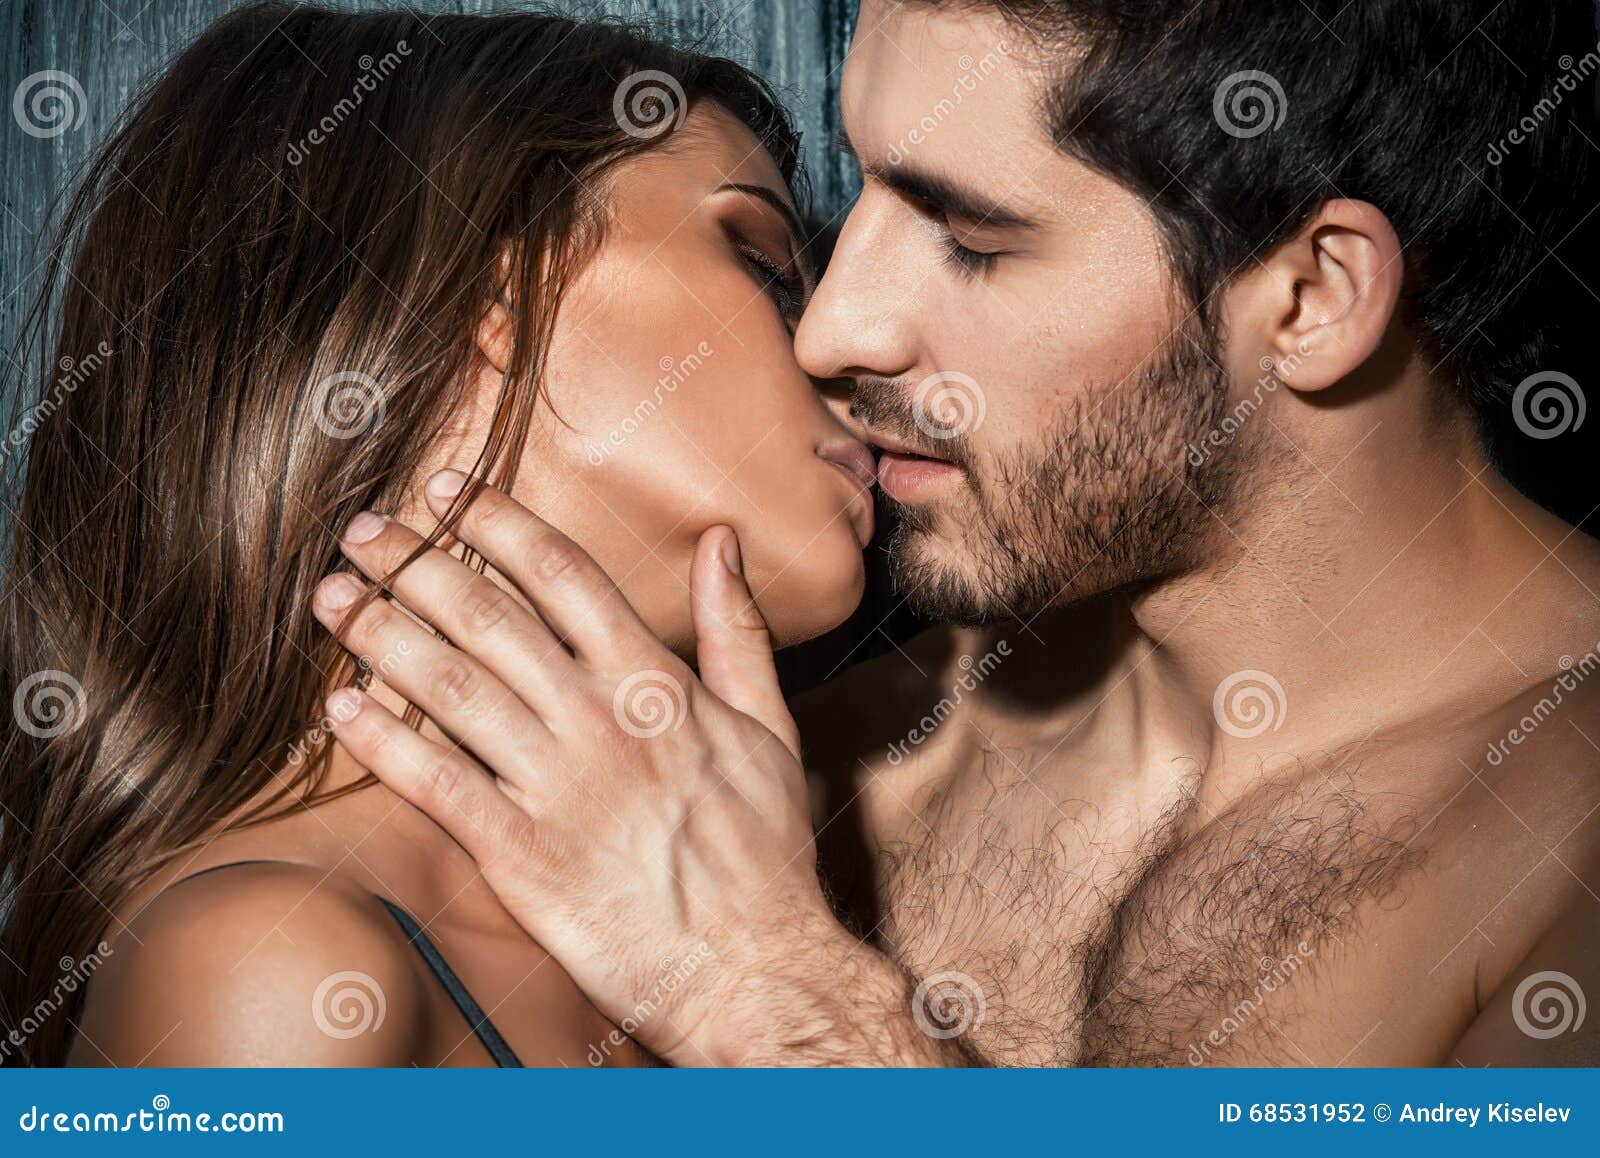 French kiss stock photo photo